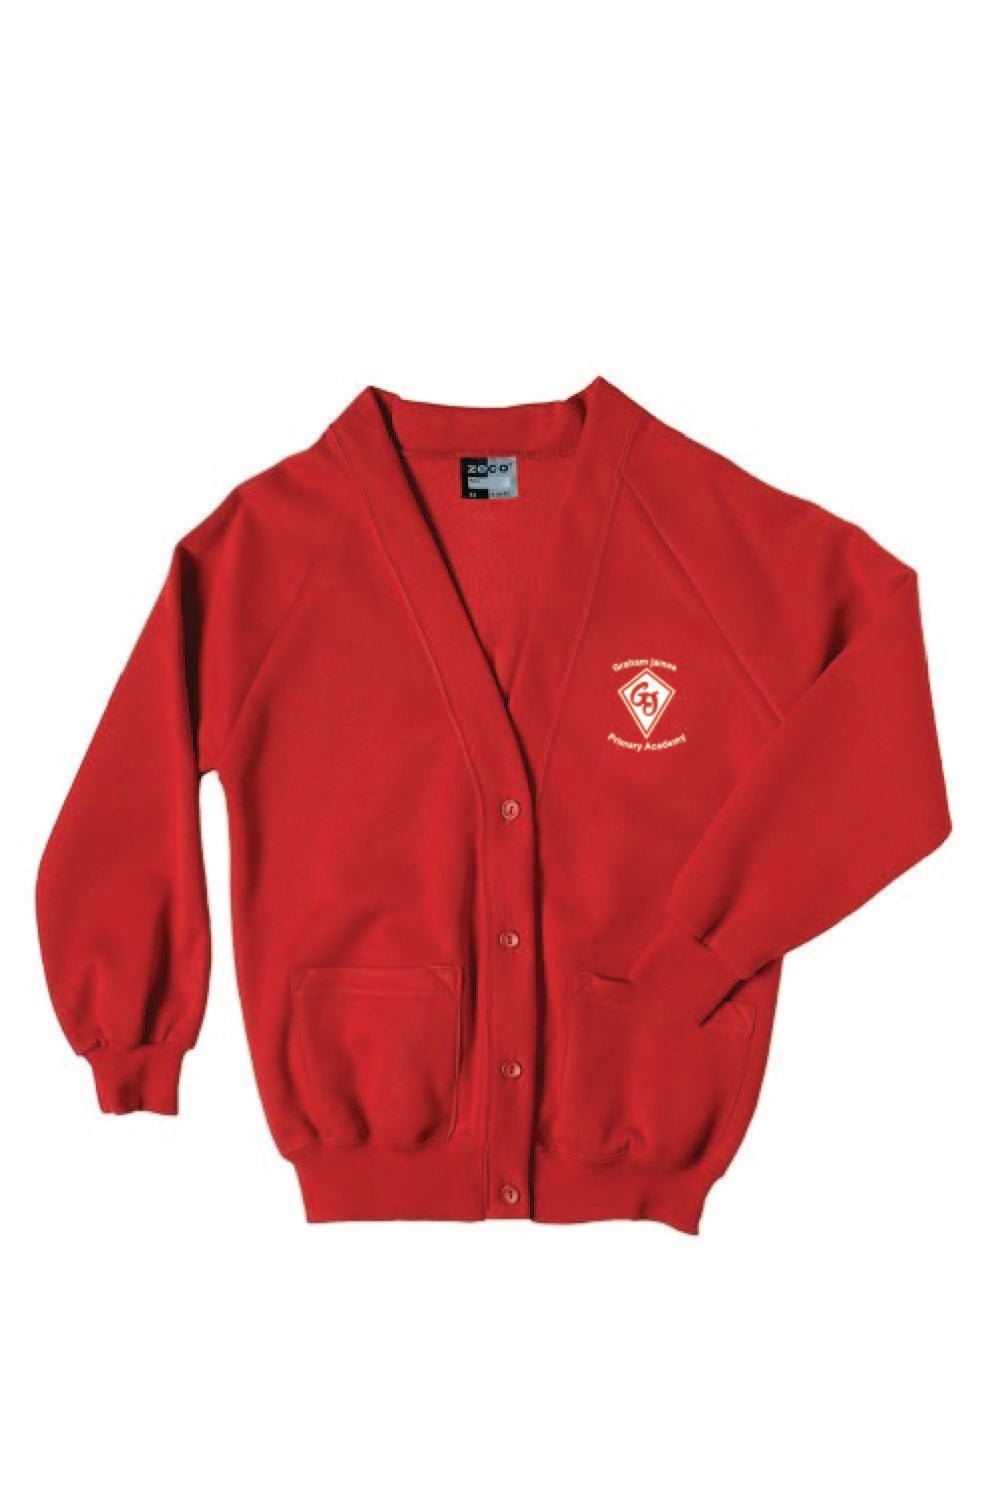 Graham James Sweatshirt Cardigan - Uniformwise Schoolwear